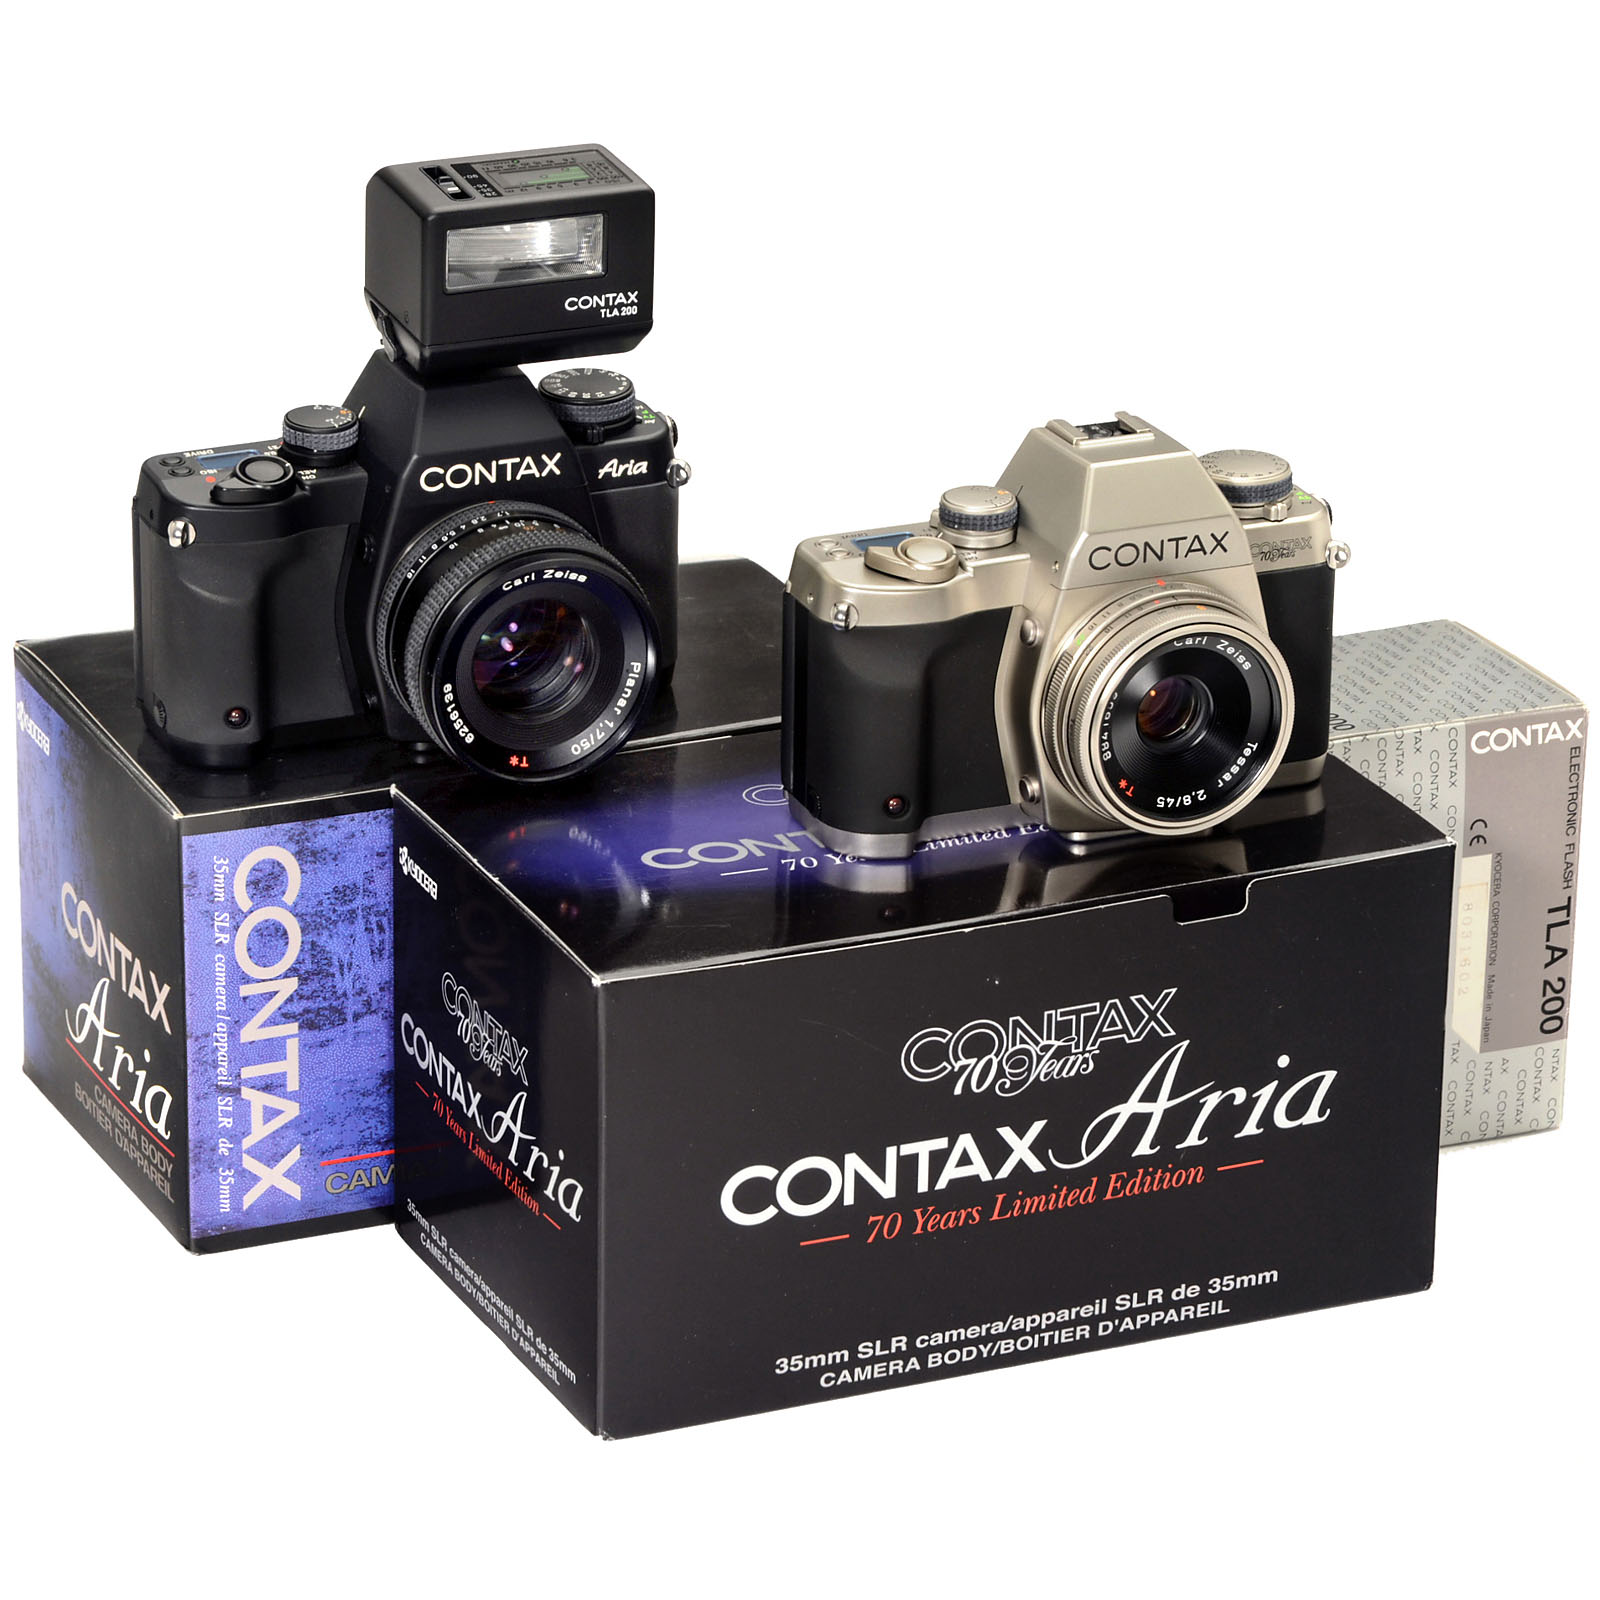 CONTAX Aria 70 yeras Limited Edition